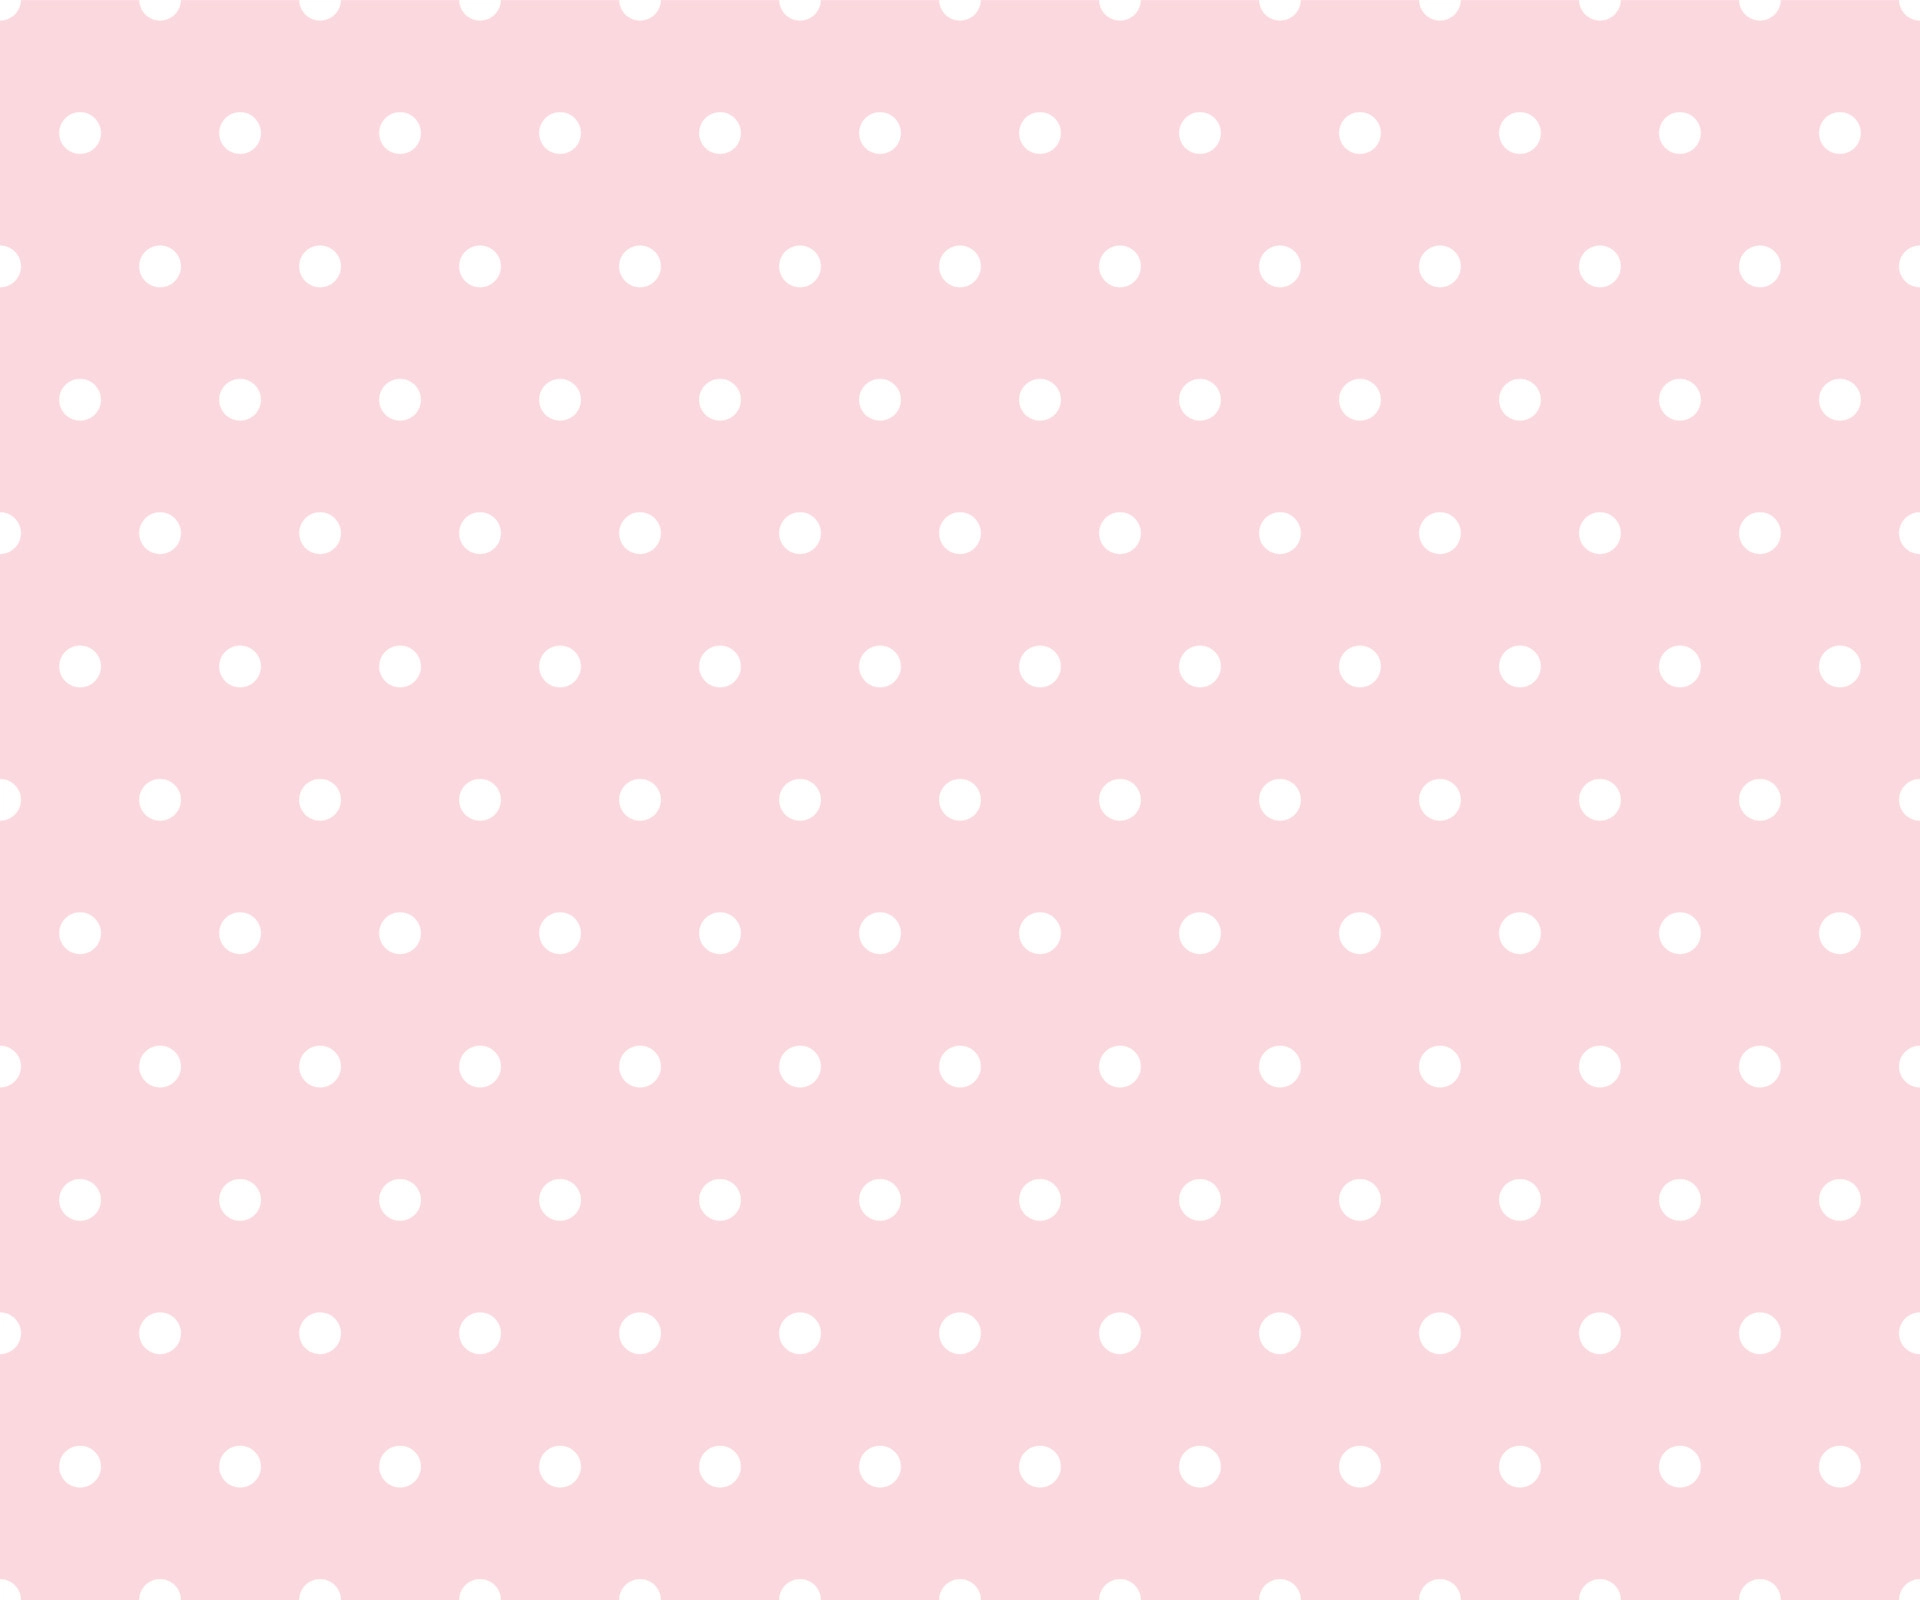 1920x1600 Pink polka dot pattern sweet background vector 7152525 Vector Art at Vecteezy